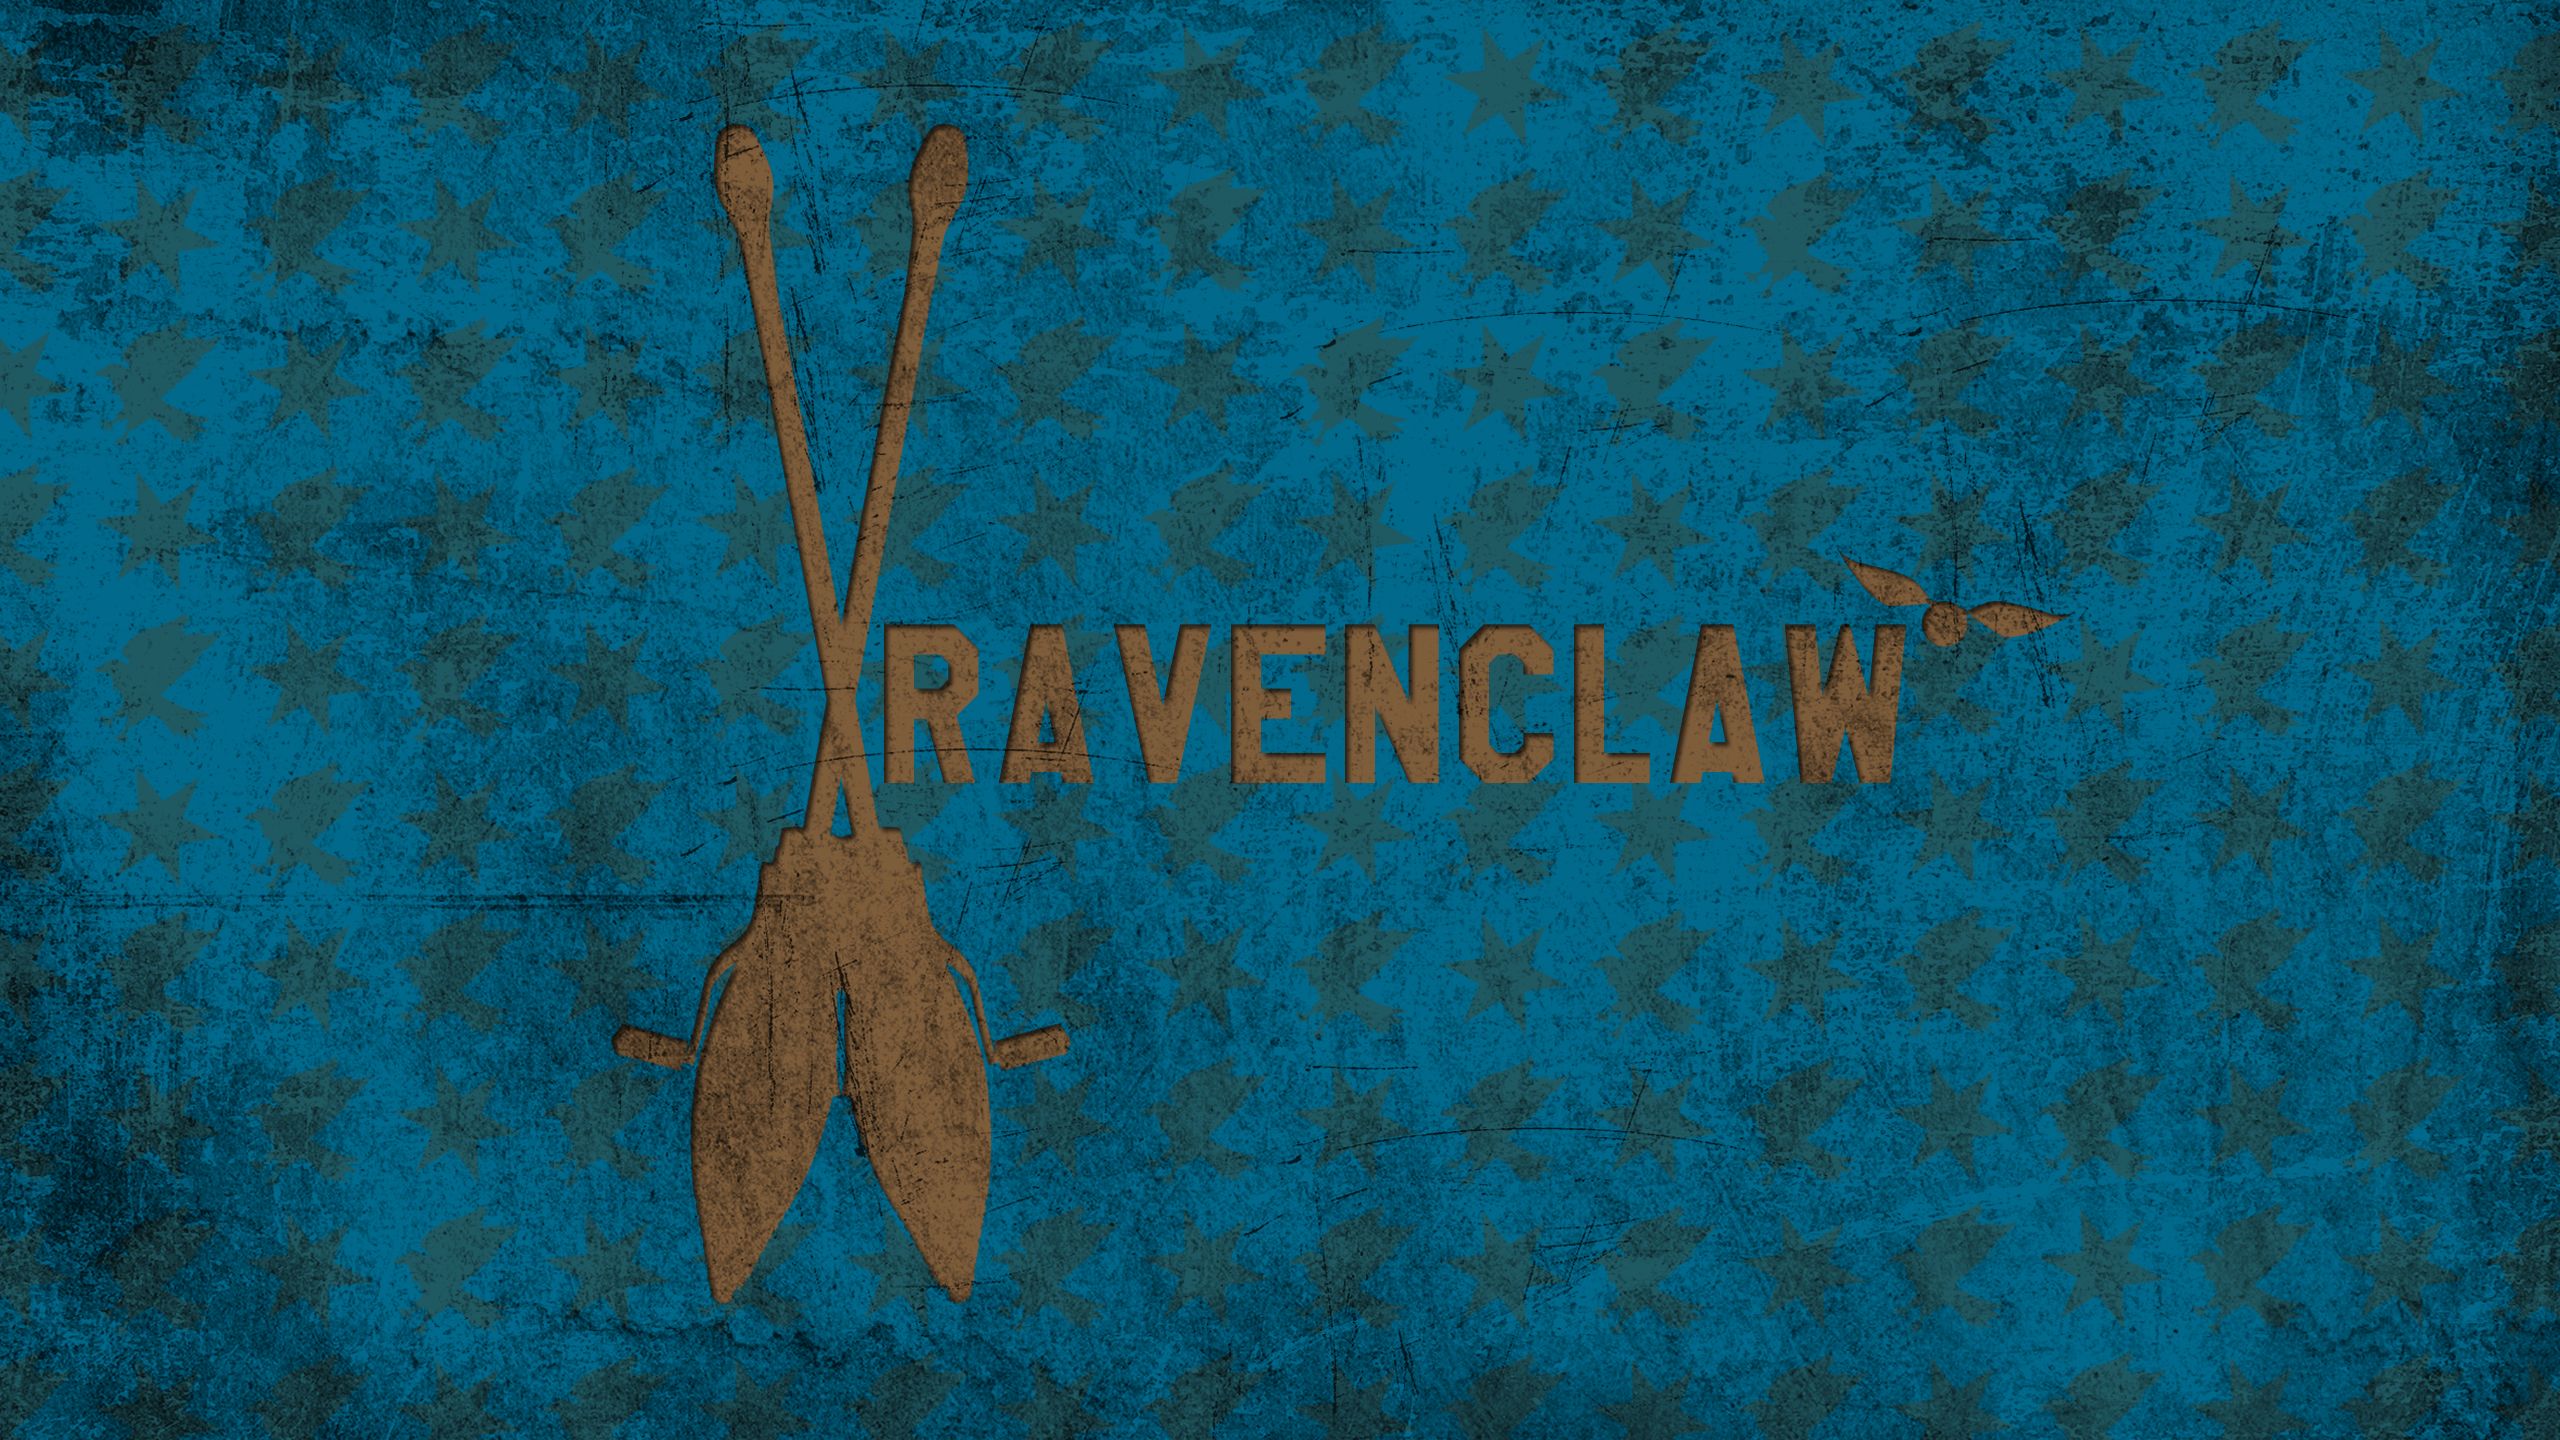 Ravenclaw Harry Potter Broom Wallpaper - Resolution:2560x1440 - ID:200274 -  